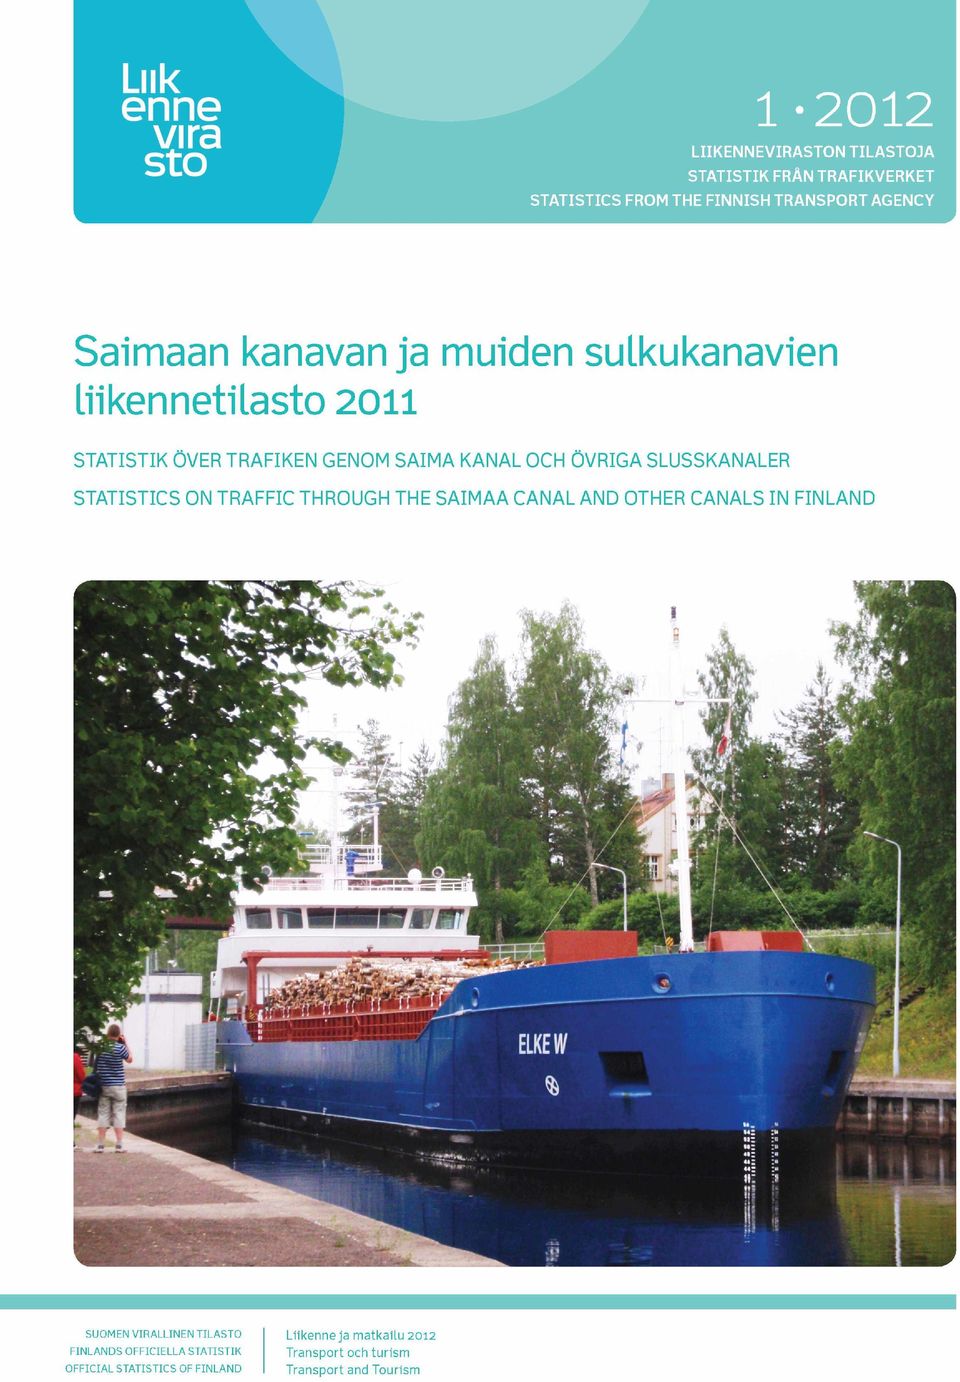 SLUSSKANALER STATISTICS ON TRAFFIC THROUGH THE SAIMAA CANAL AND OTHER CANALS IN FINLAND SUOMEN VIRALLINEN TILASTO